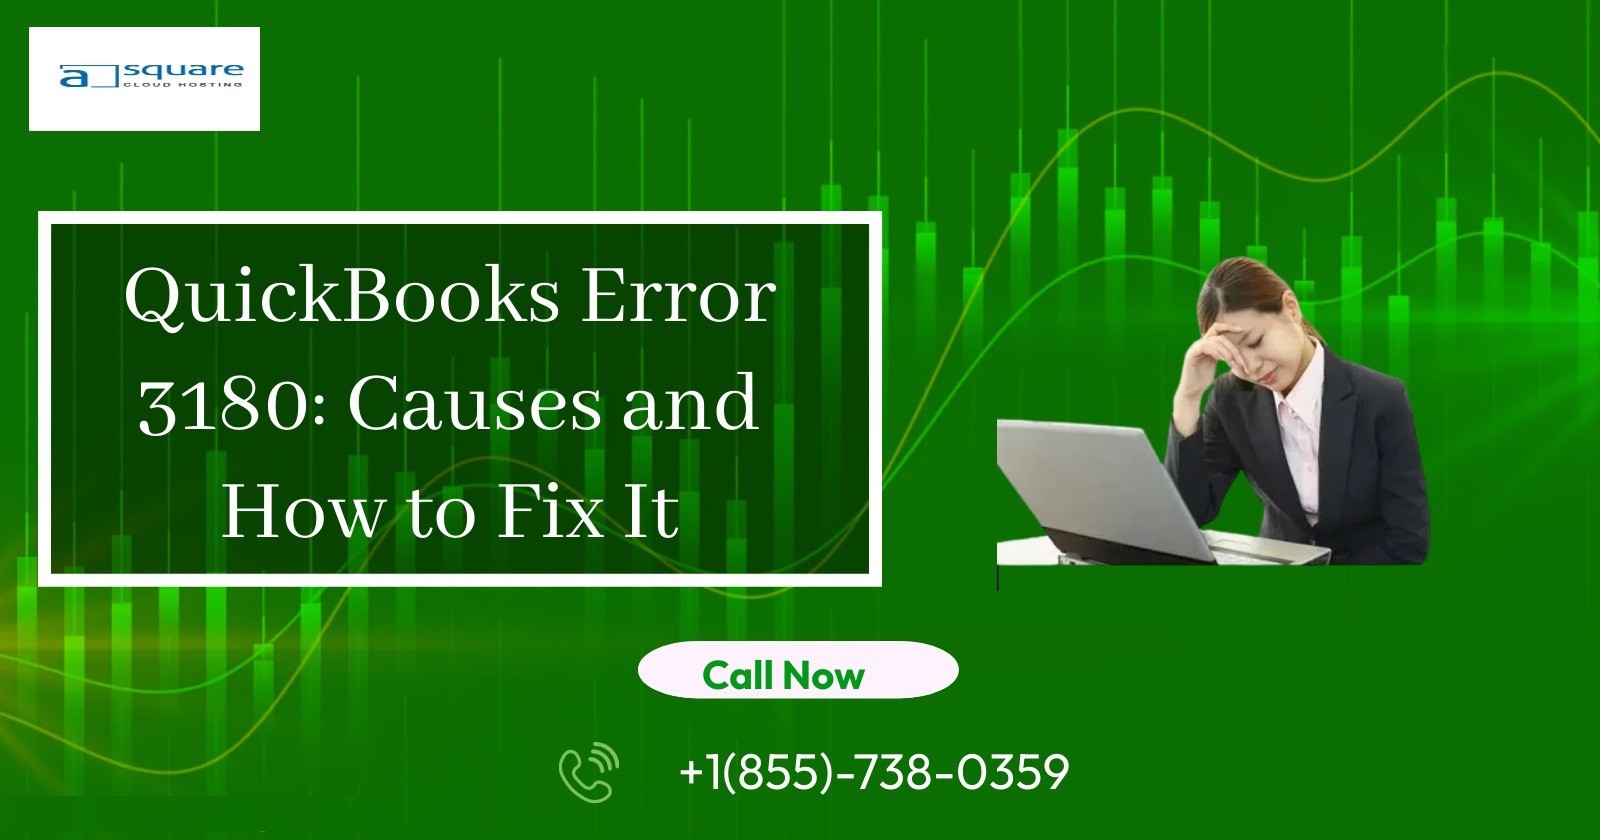 QuickBooks Error 3180: Causes and How to Fix It